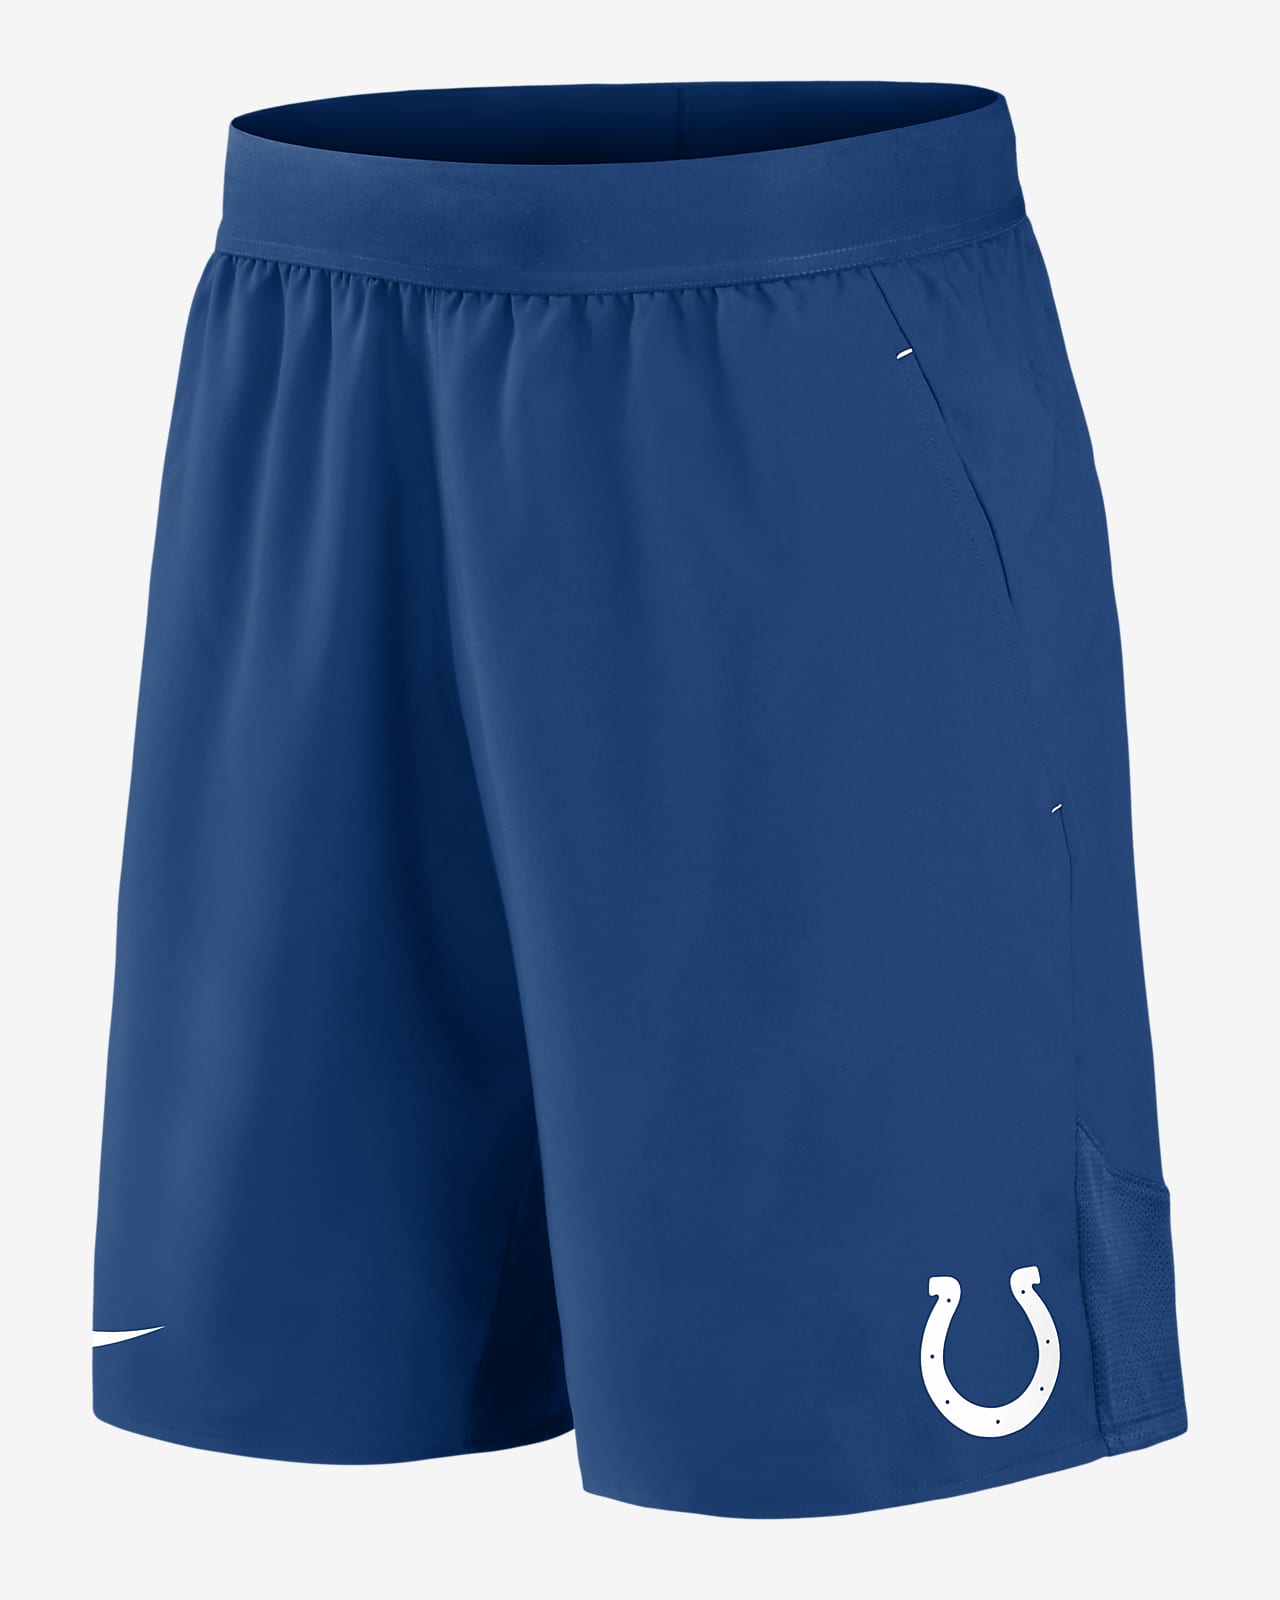 Dri-FIT Stretch (NFL Indianapolis Colts) Men's Nike.com